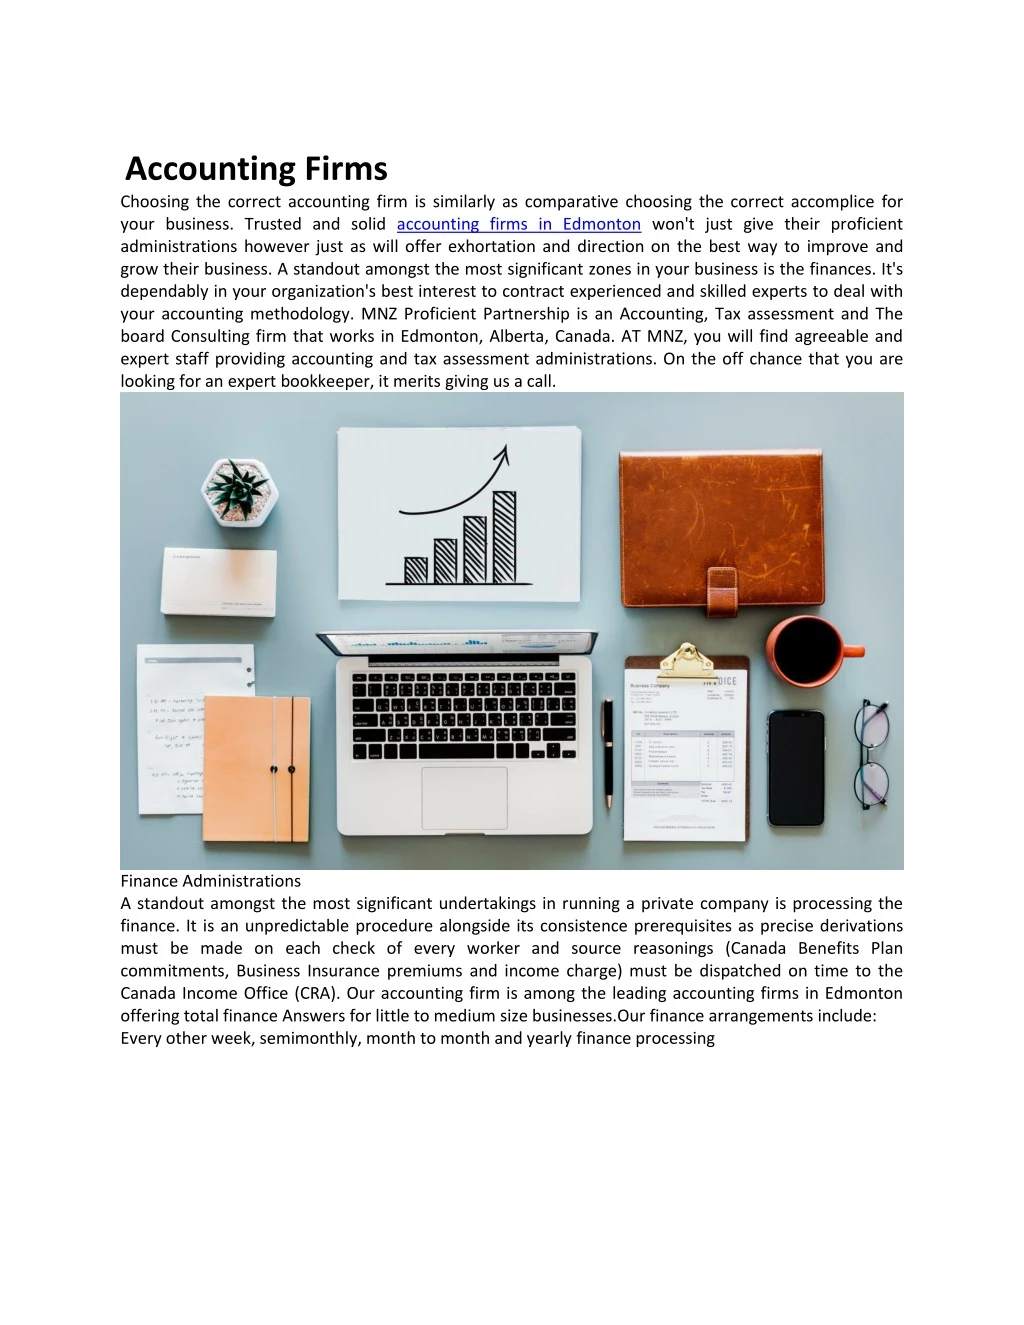 accounting firms choosing the correct accounting